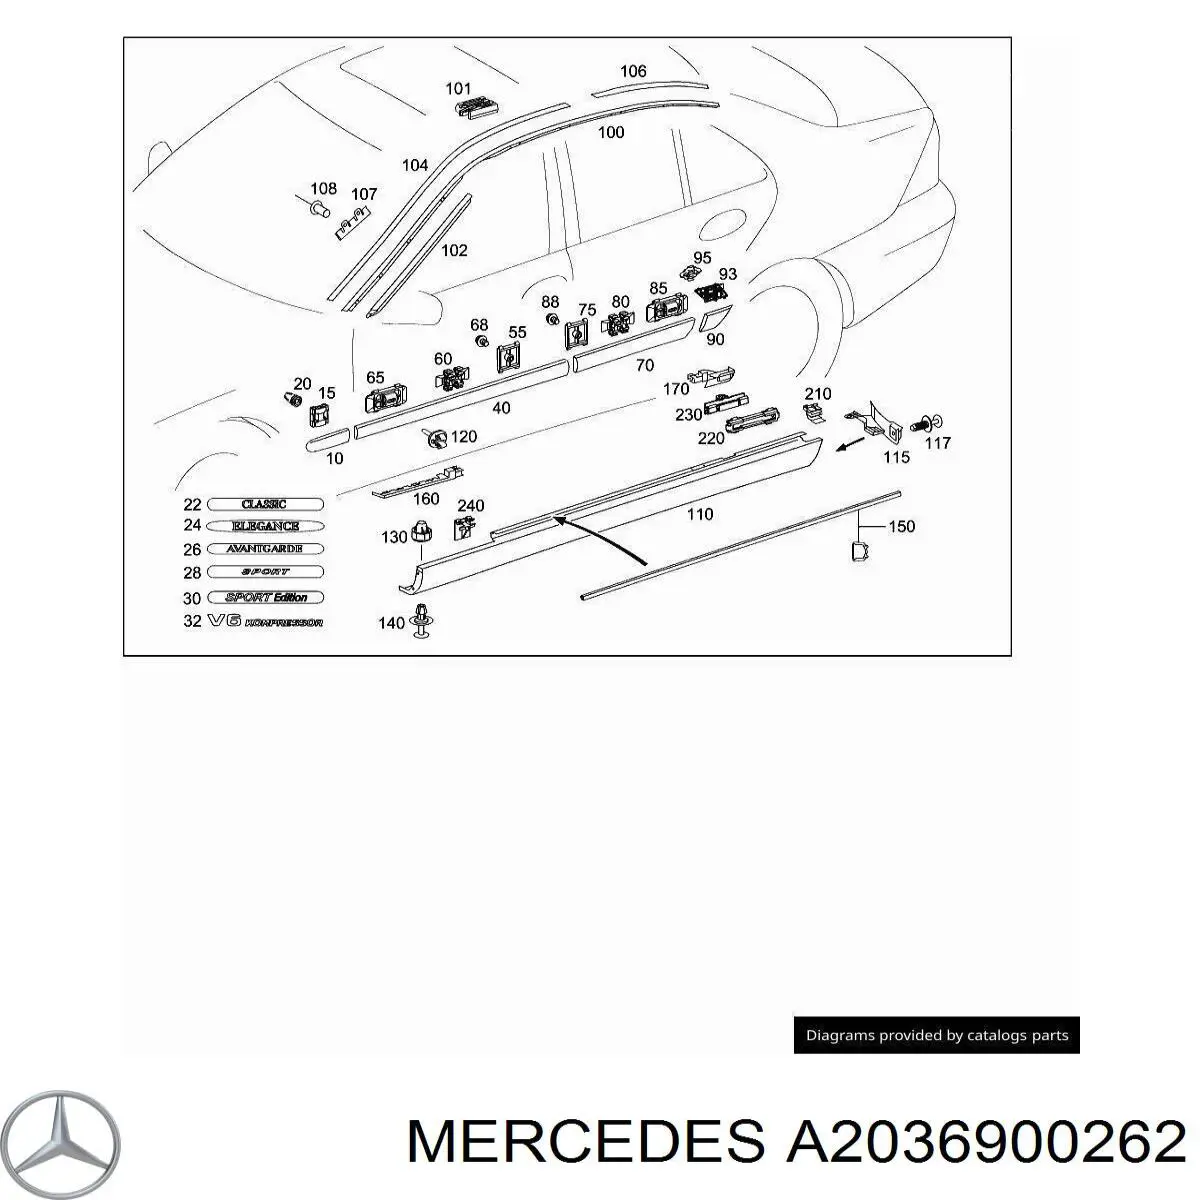 A20369002629999 Mercedes moldura de guardabarro delantero derecho